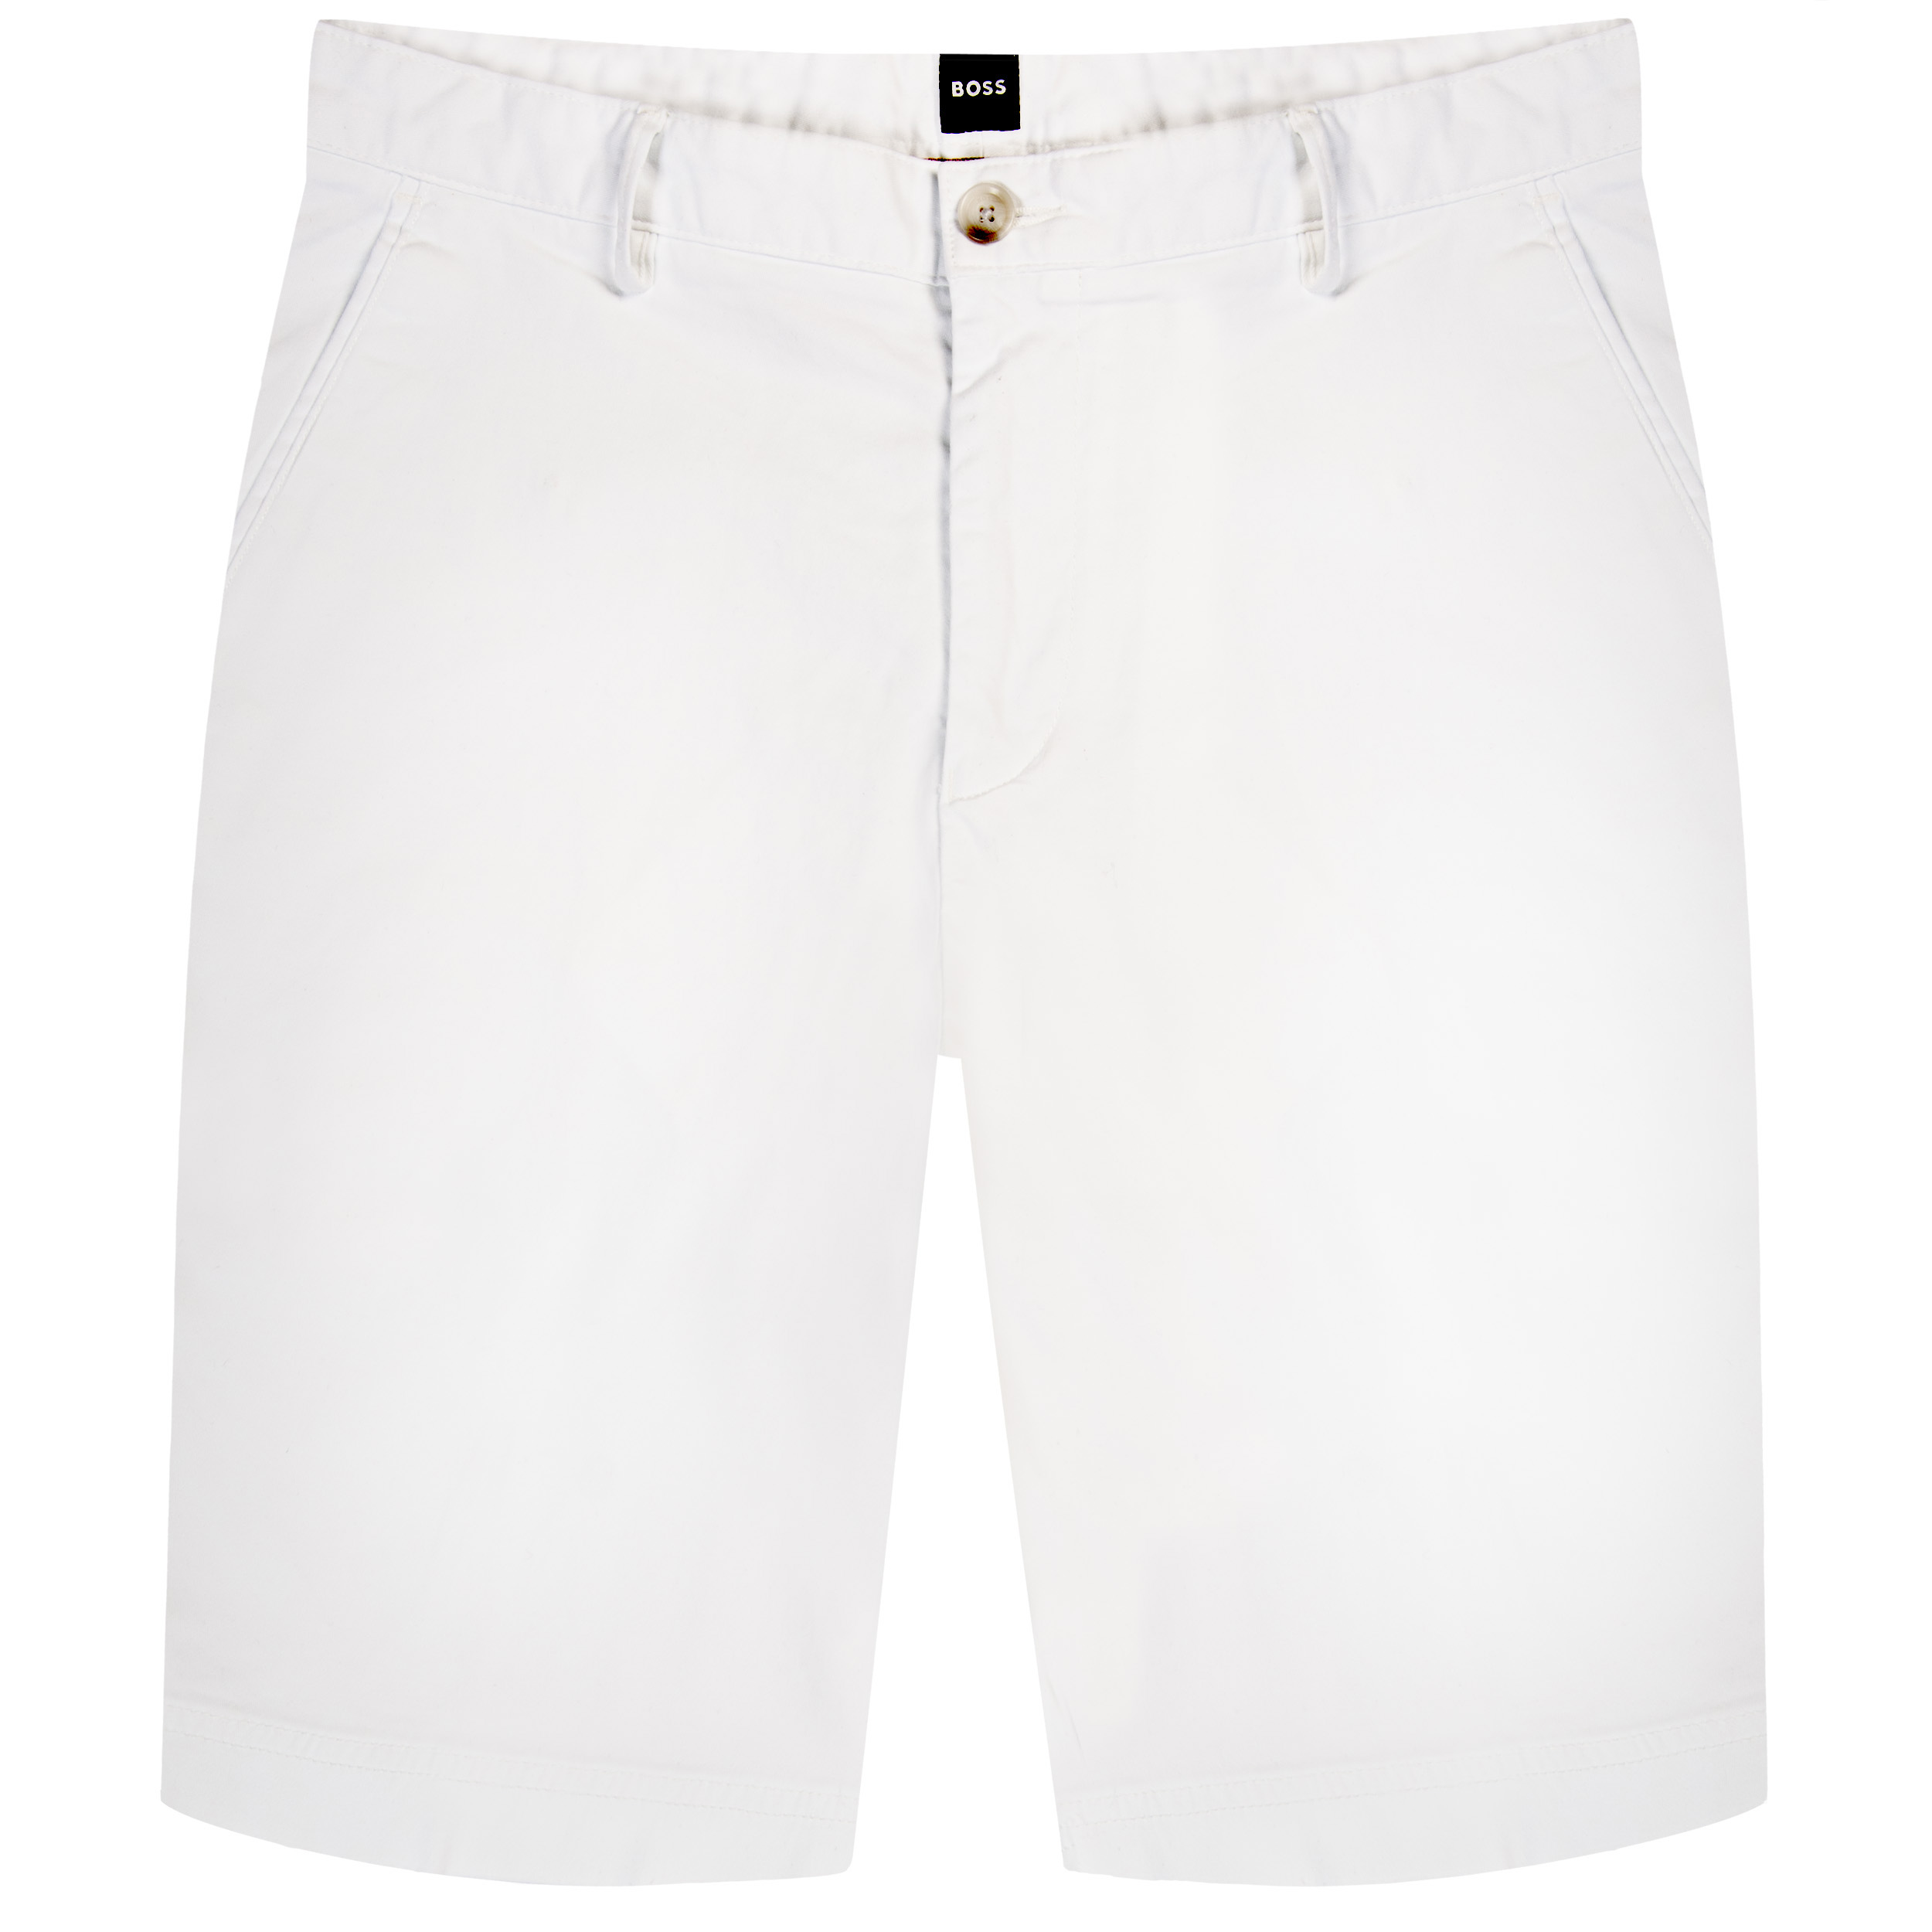 HUGO BOSS Slice Slim Fit Shorts White